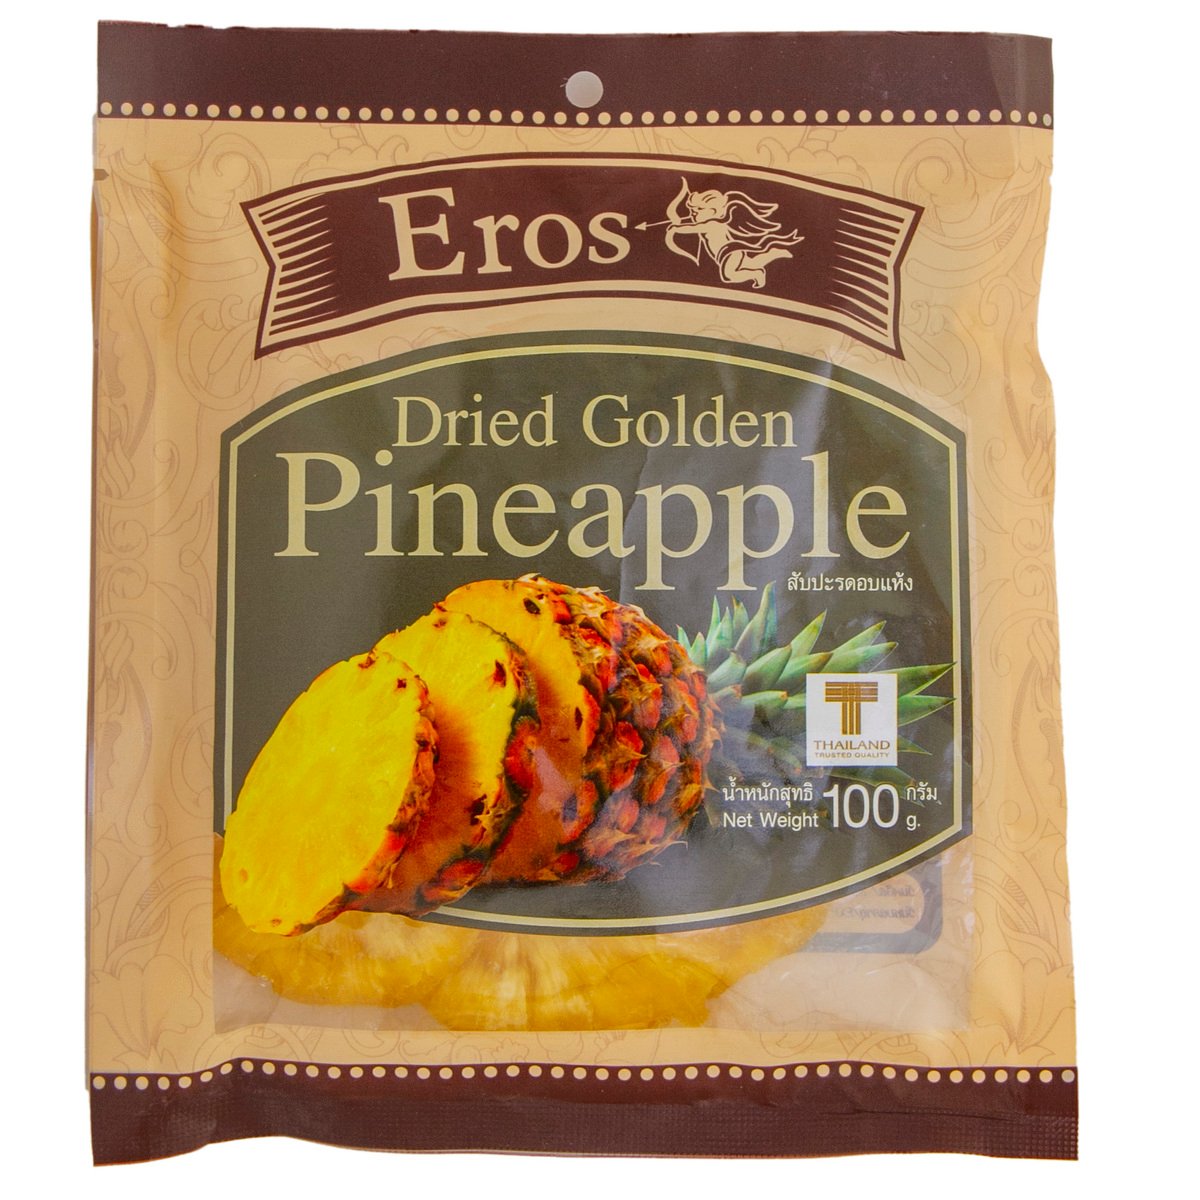 Eros Dried Golden Pineapple 100 g